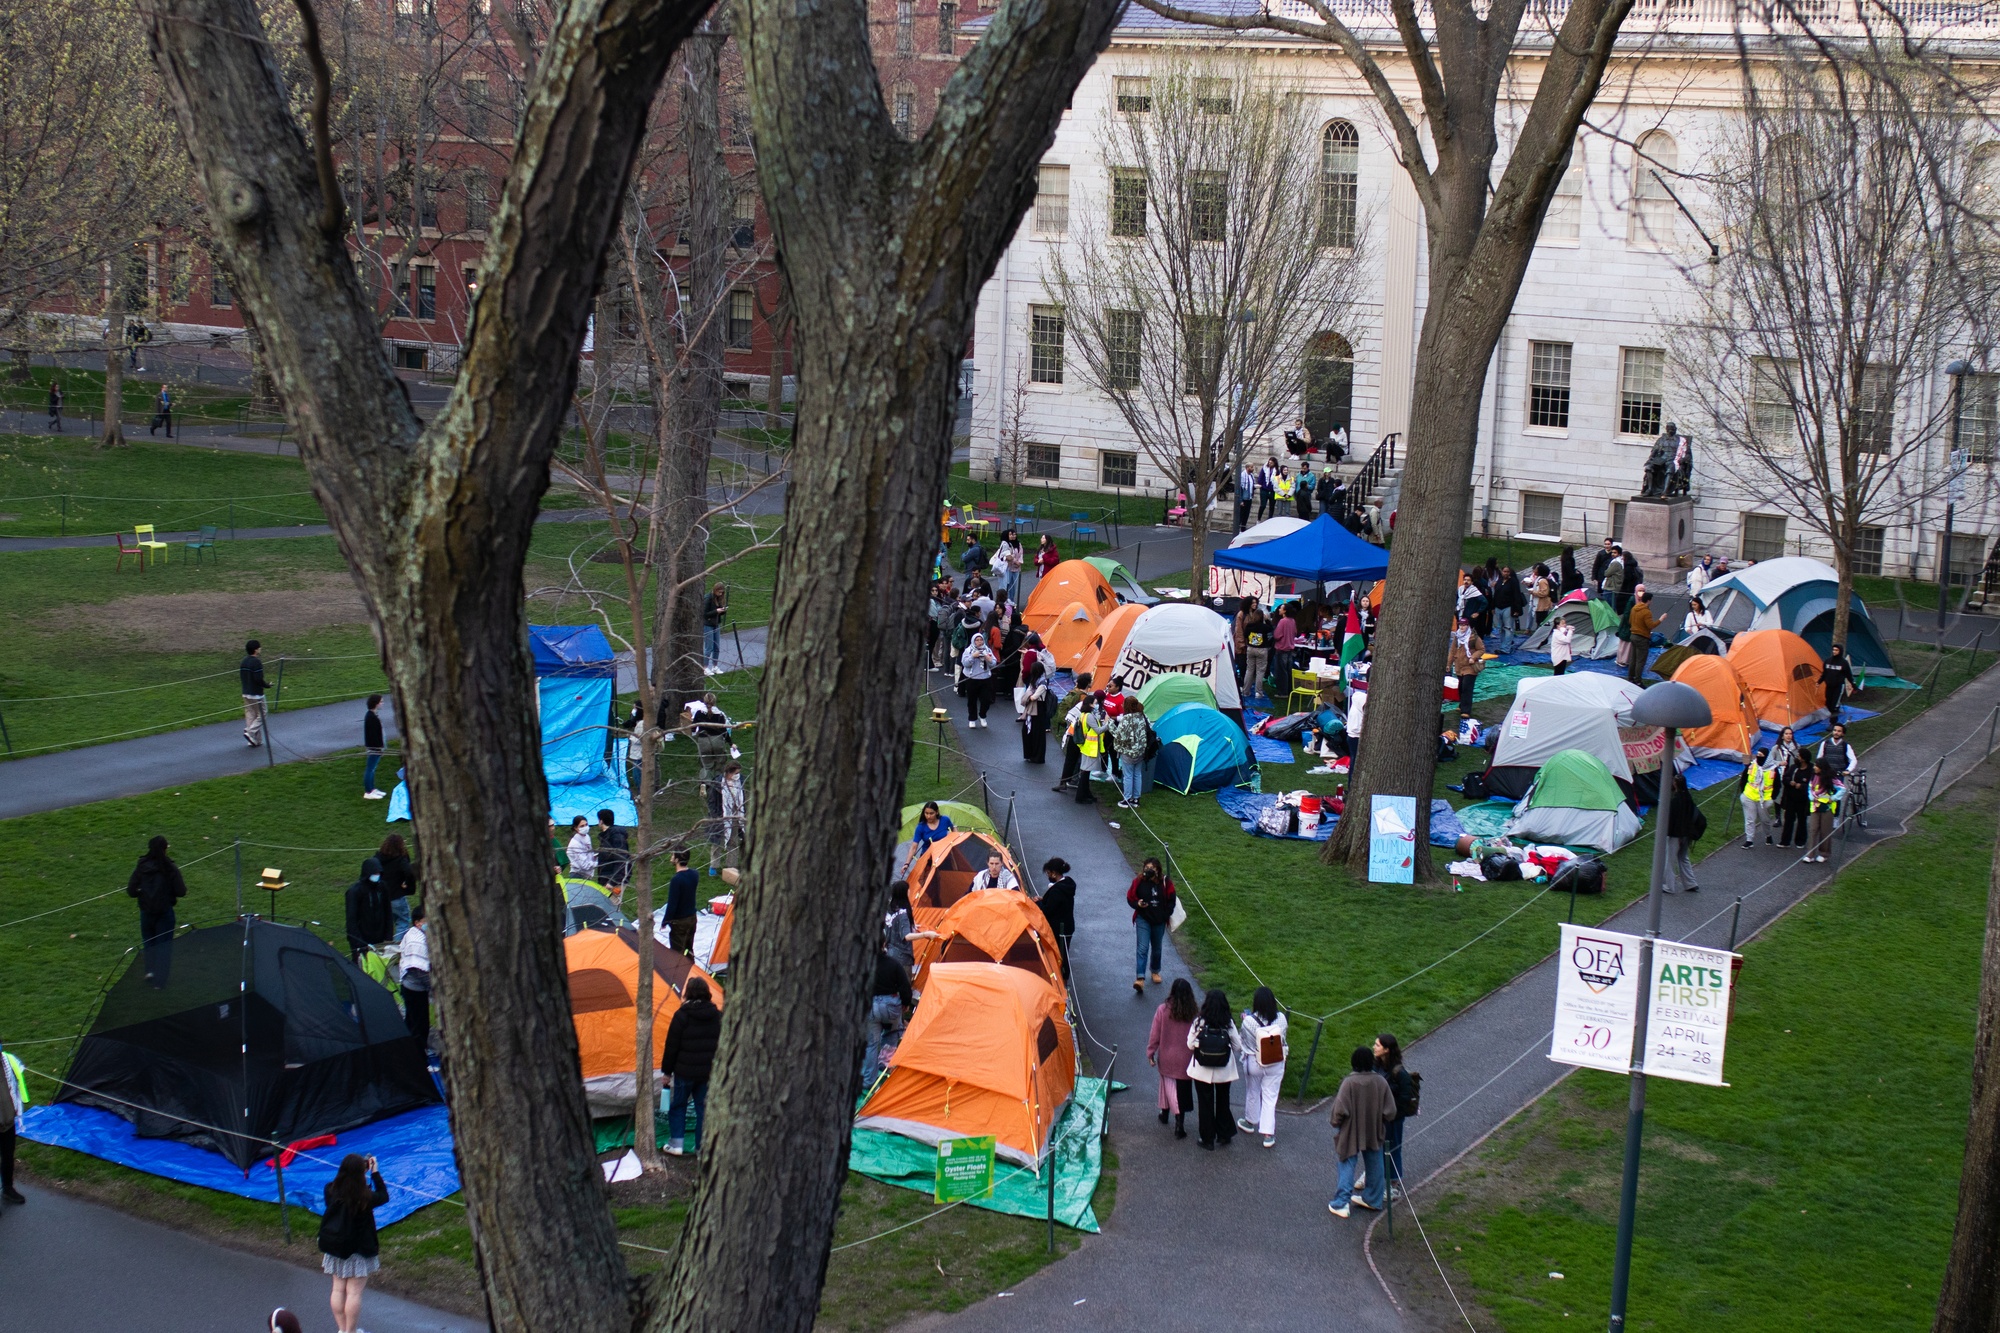 LIVE UPDATES: Pro-Palestine Protesters Begin Encampment in Harvard Yard | News